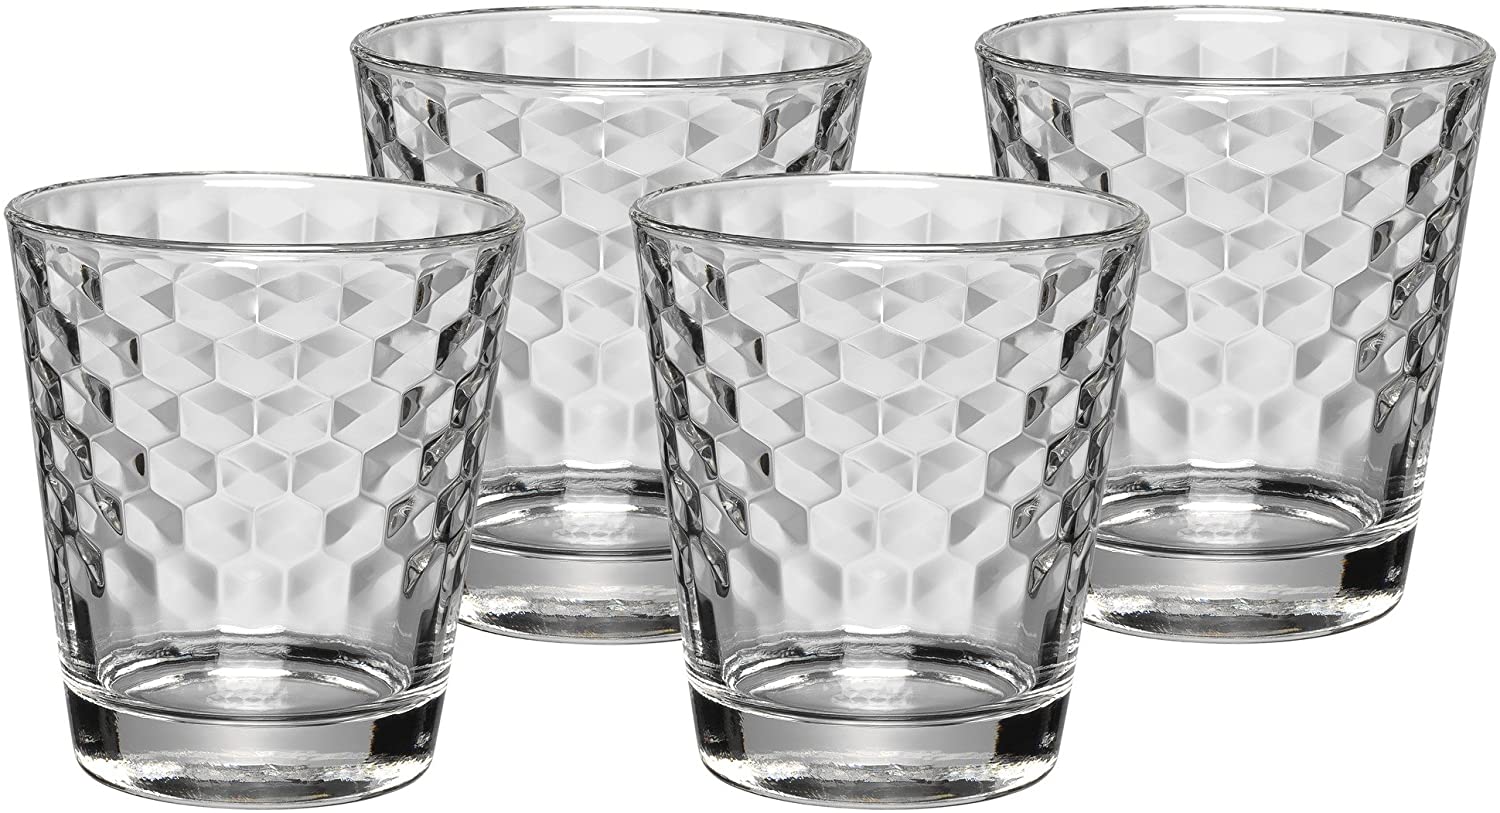 WMF Tumbler Glasses Set of 4 Tumblers Aroma Honeycomb Pattern Cocktail Long Drink Glass Heat-Resistant Dishwasher Safe